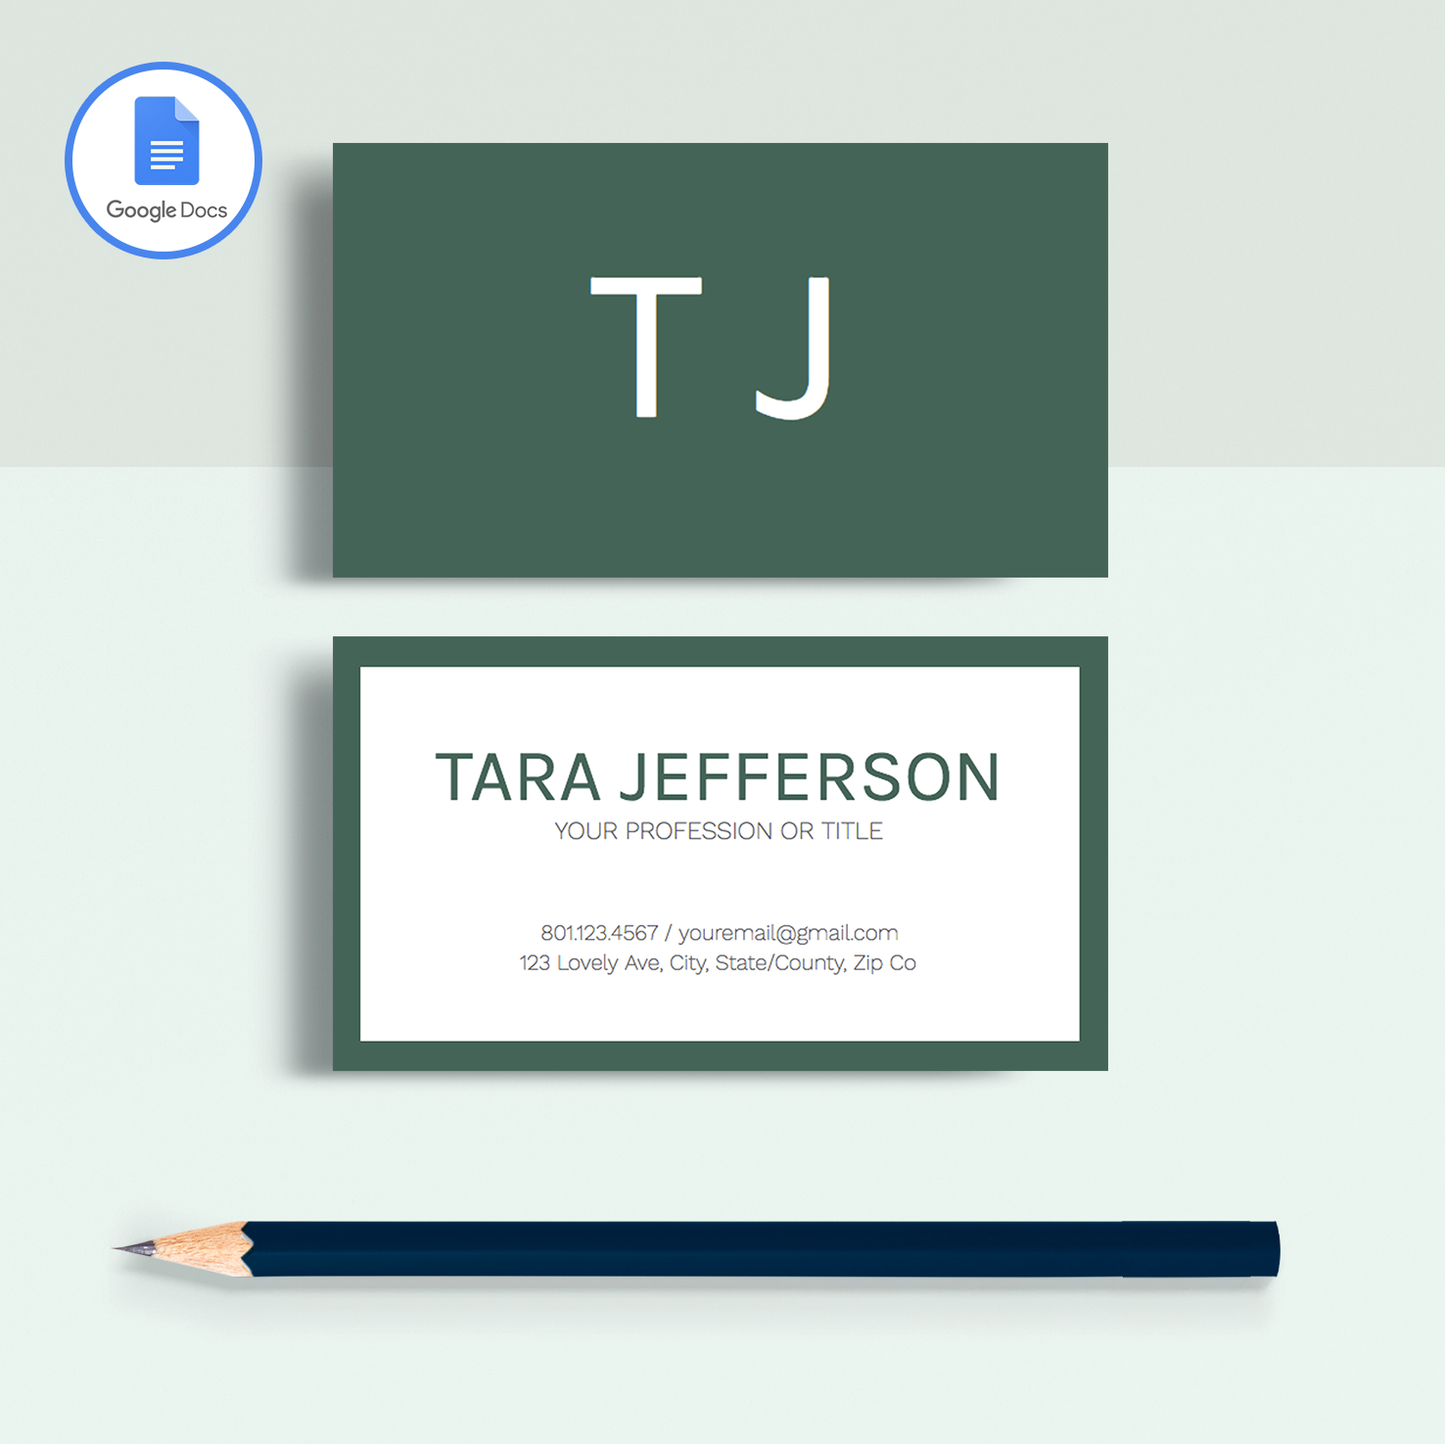 Tara Jefferson | Google Docs Professional Business Cards Template - MioDocs